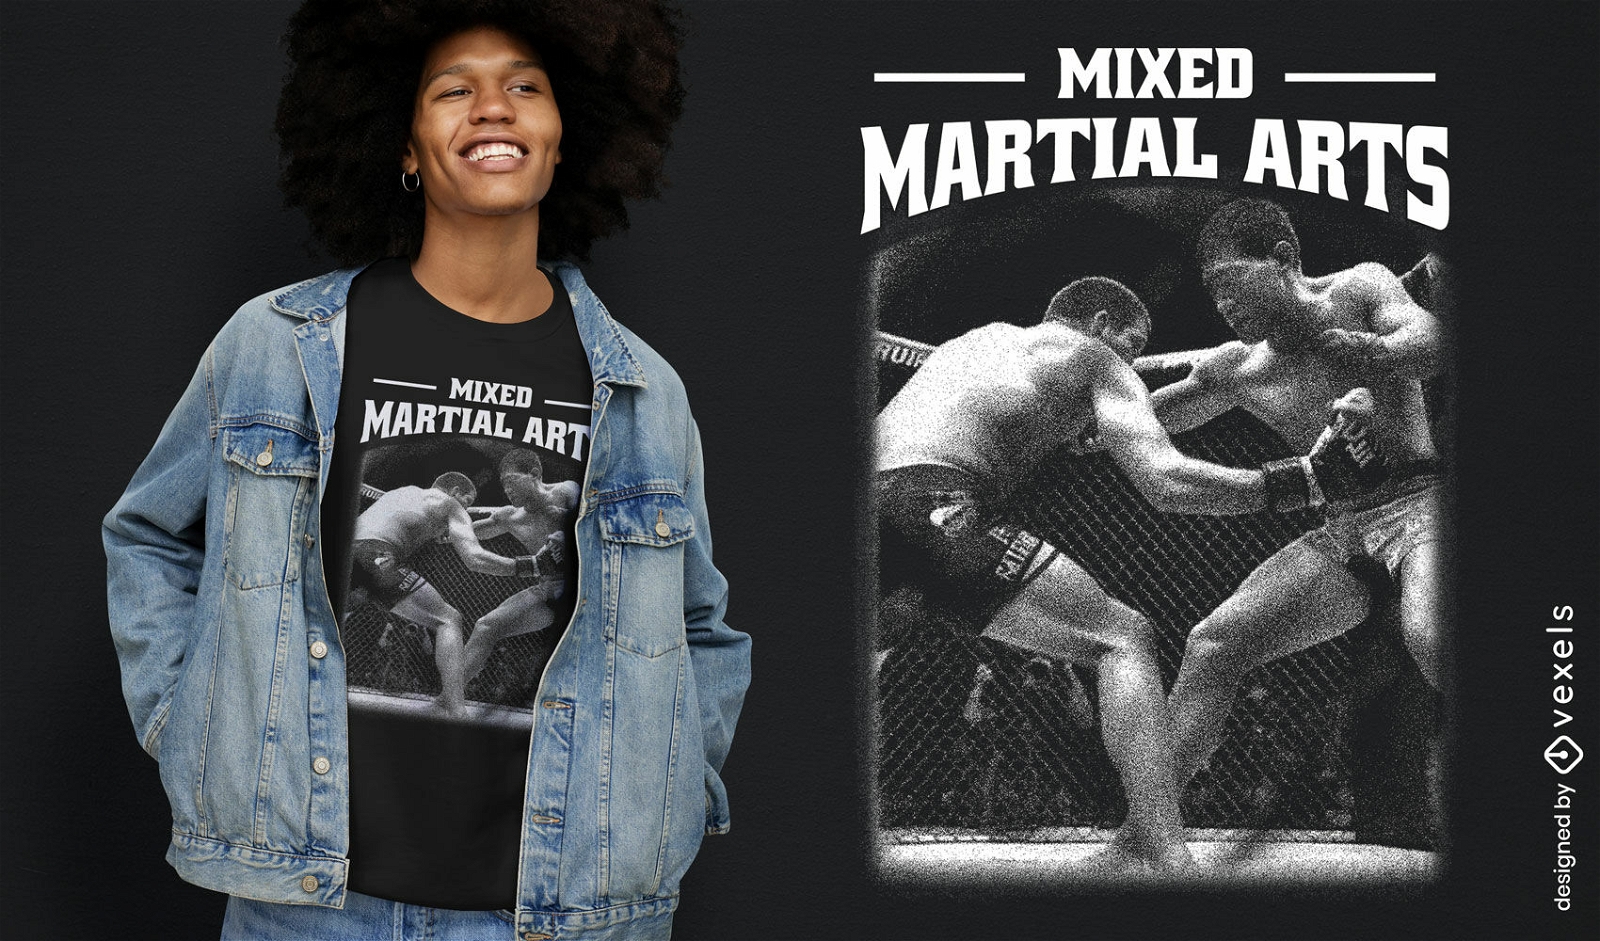 Action-filled martial arts t-shirt design